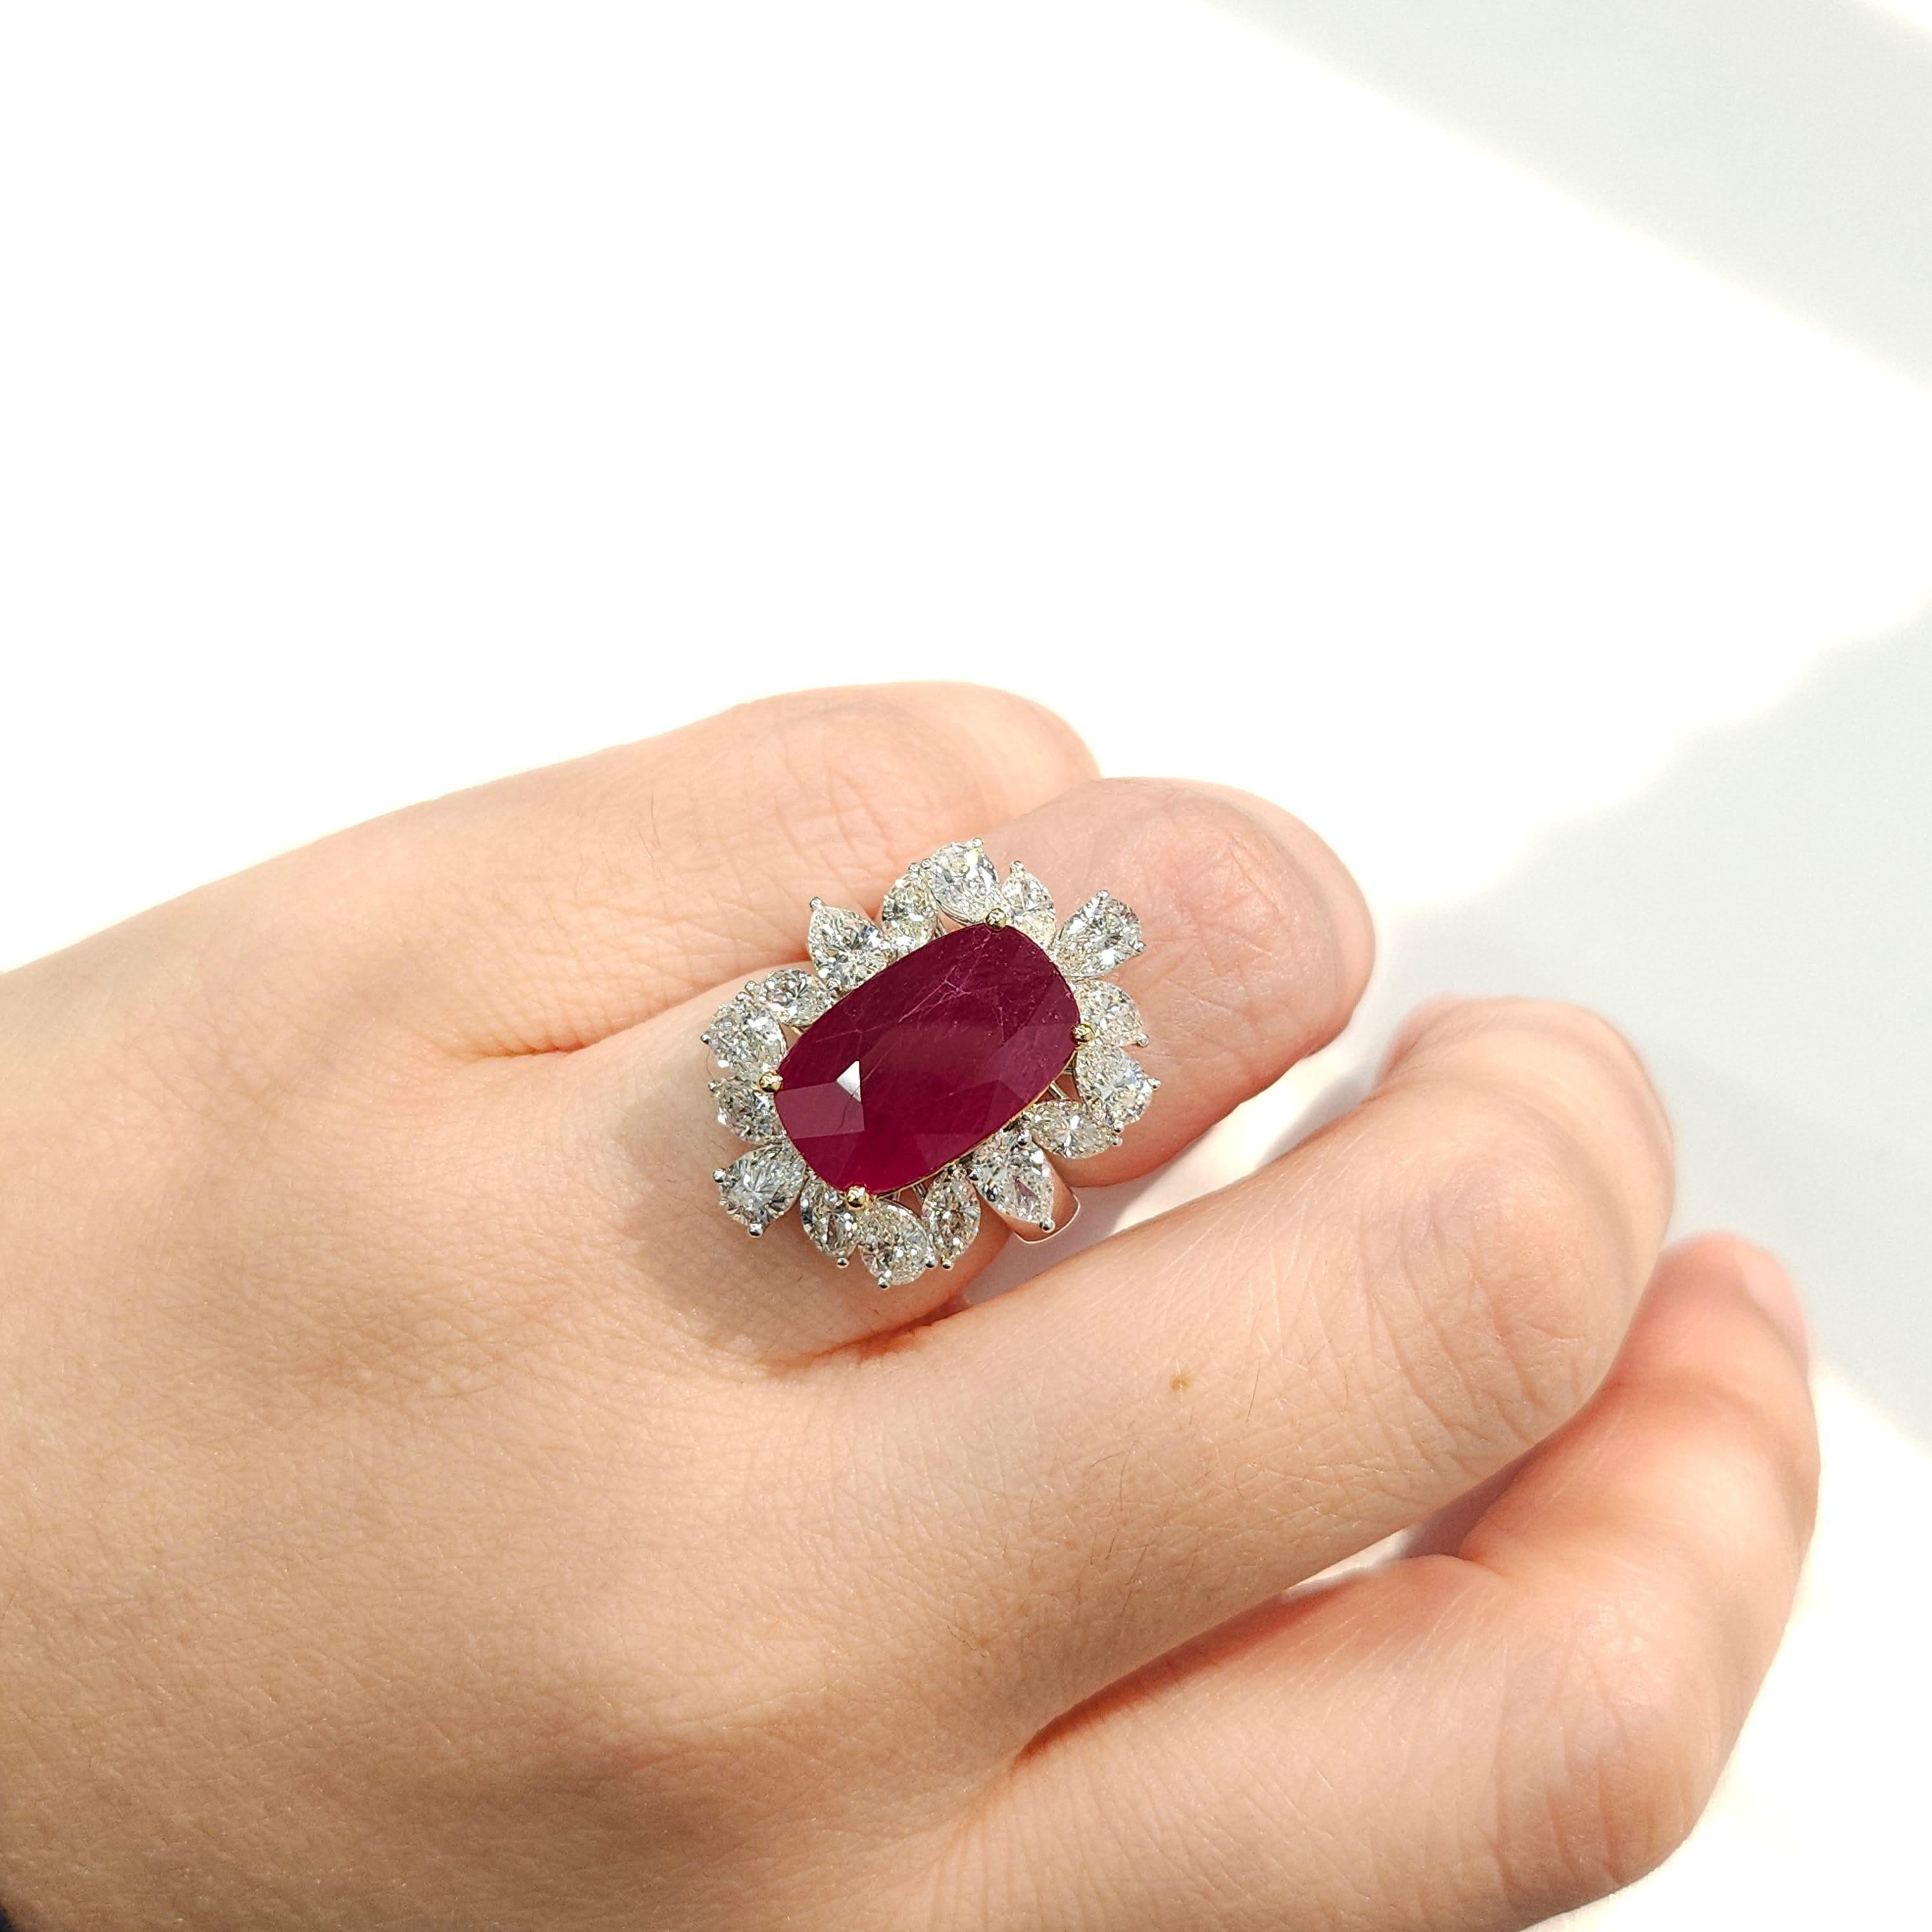 IGI Certified 8.75 Carat Ruby & 3.14 Carat Diamond Ring in 18K White Gold For Sale 5